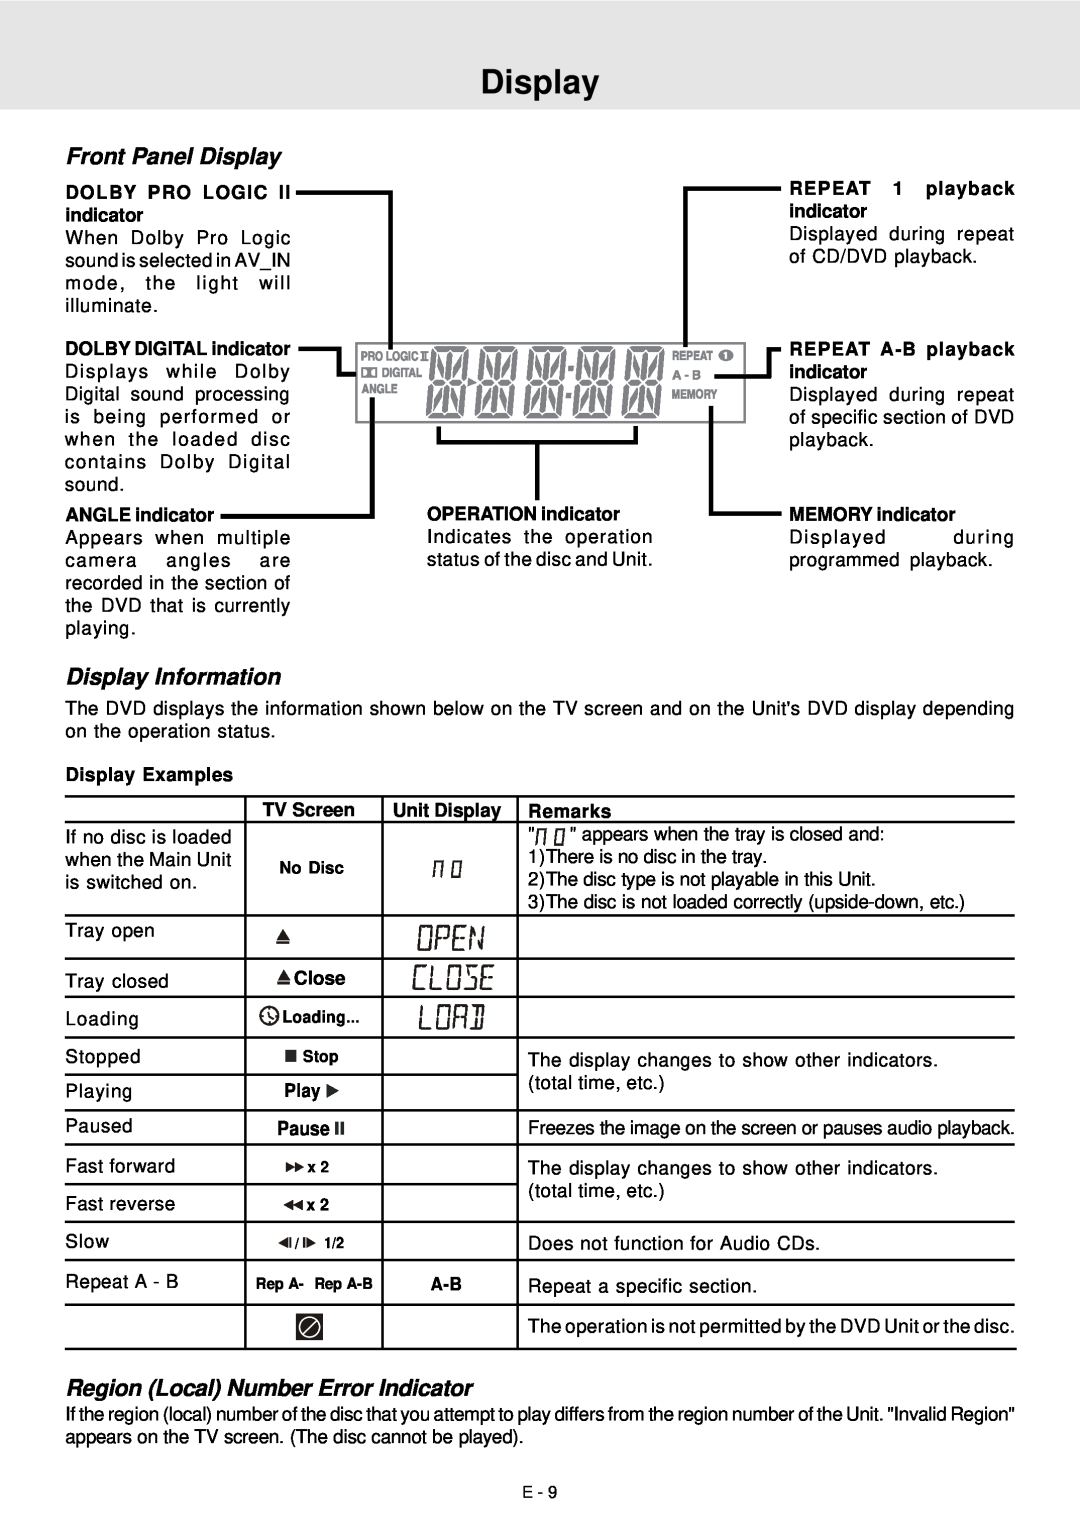 Venturer STS91 manual Front Panel Display, Display Information, Region Local Number Error Indicator 